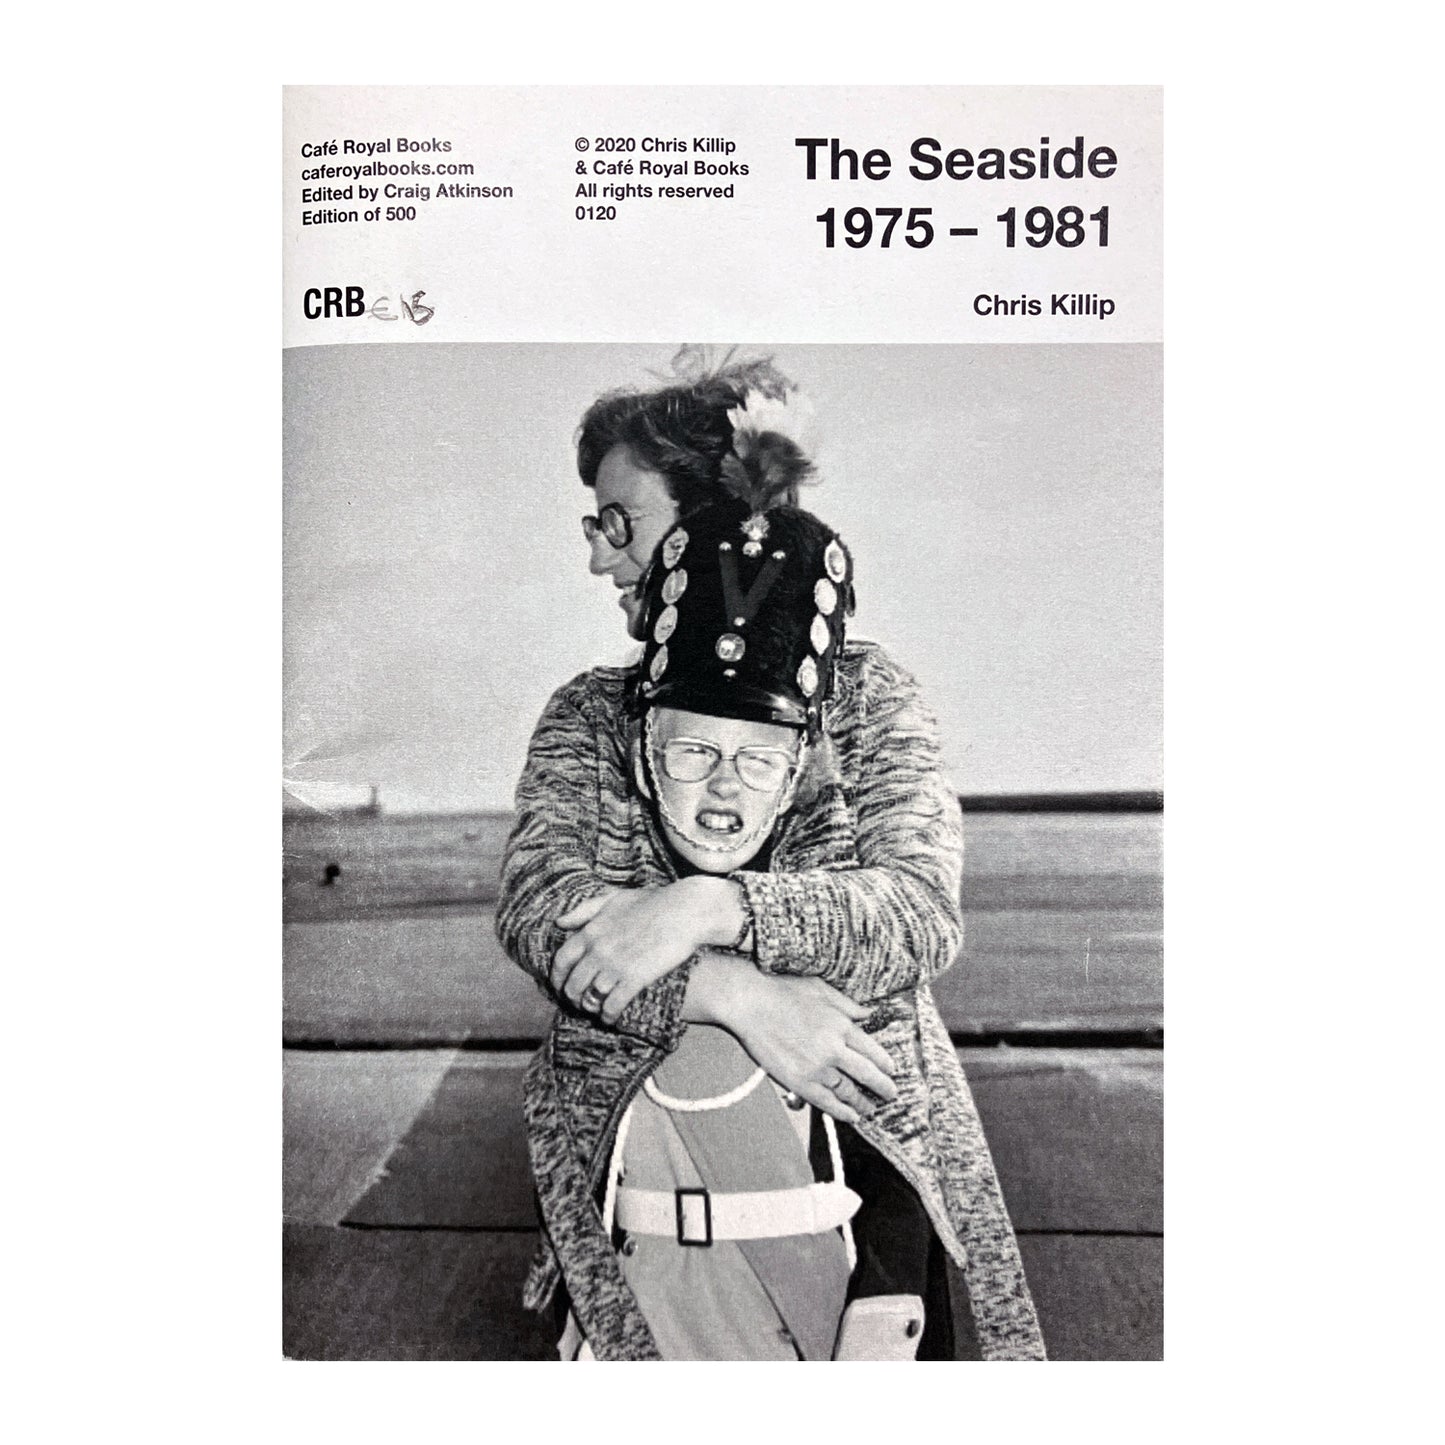 The Seaside 1975 – 1981 by Chris Killip Photo Museum Ireland